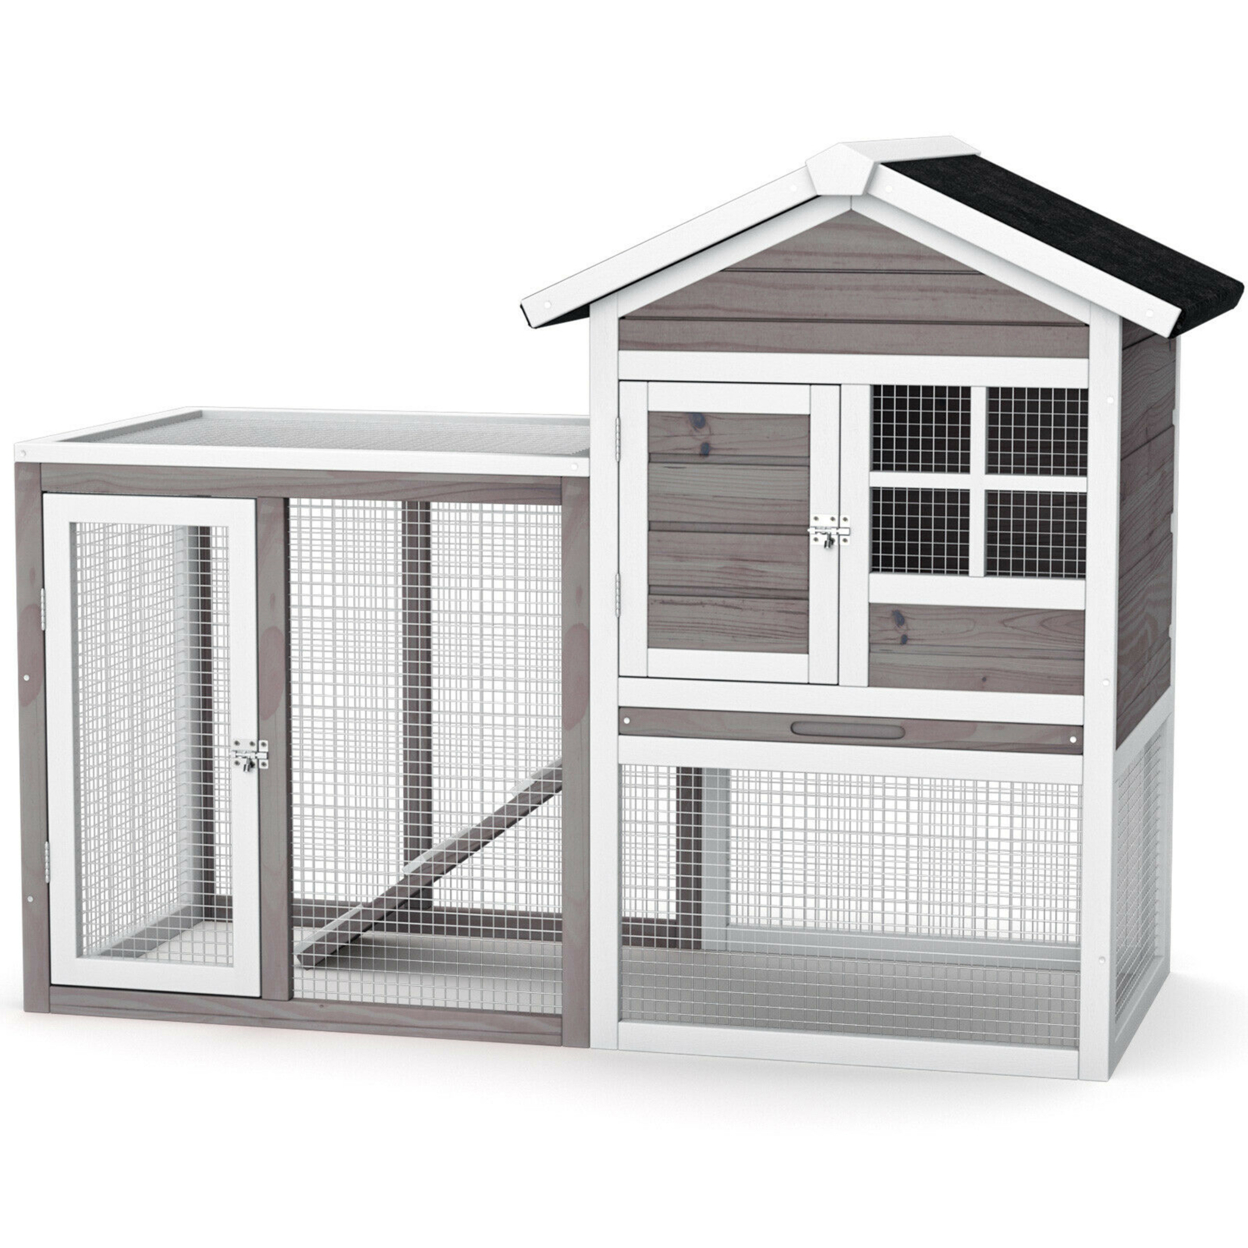 Wooden Chicken Coop 2-Story Rabbit Hutch Indoor Outdoor Use - Gray + White + Black